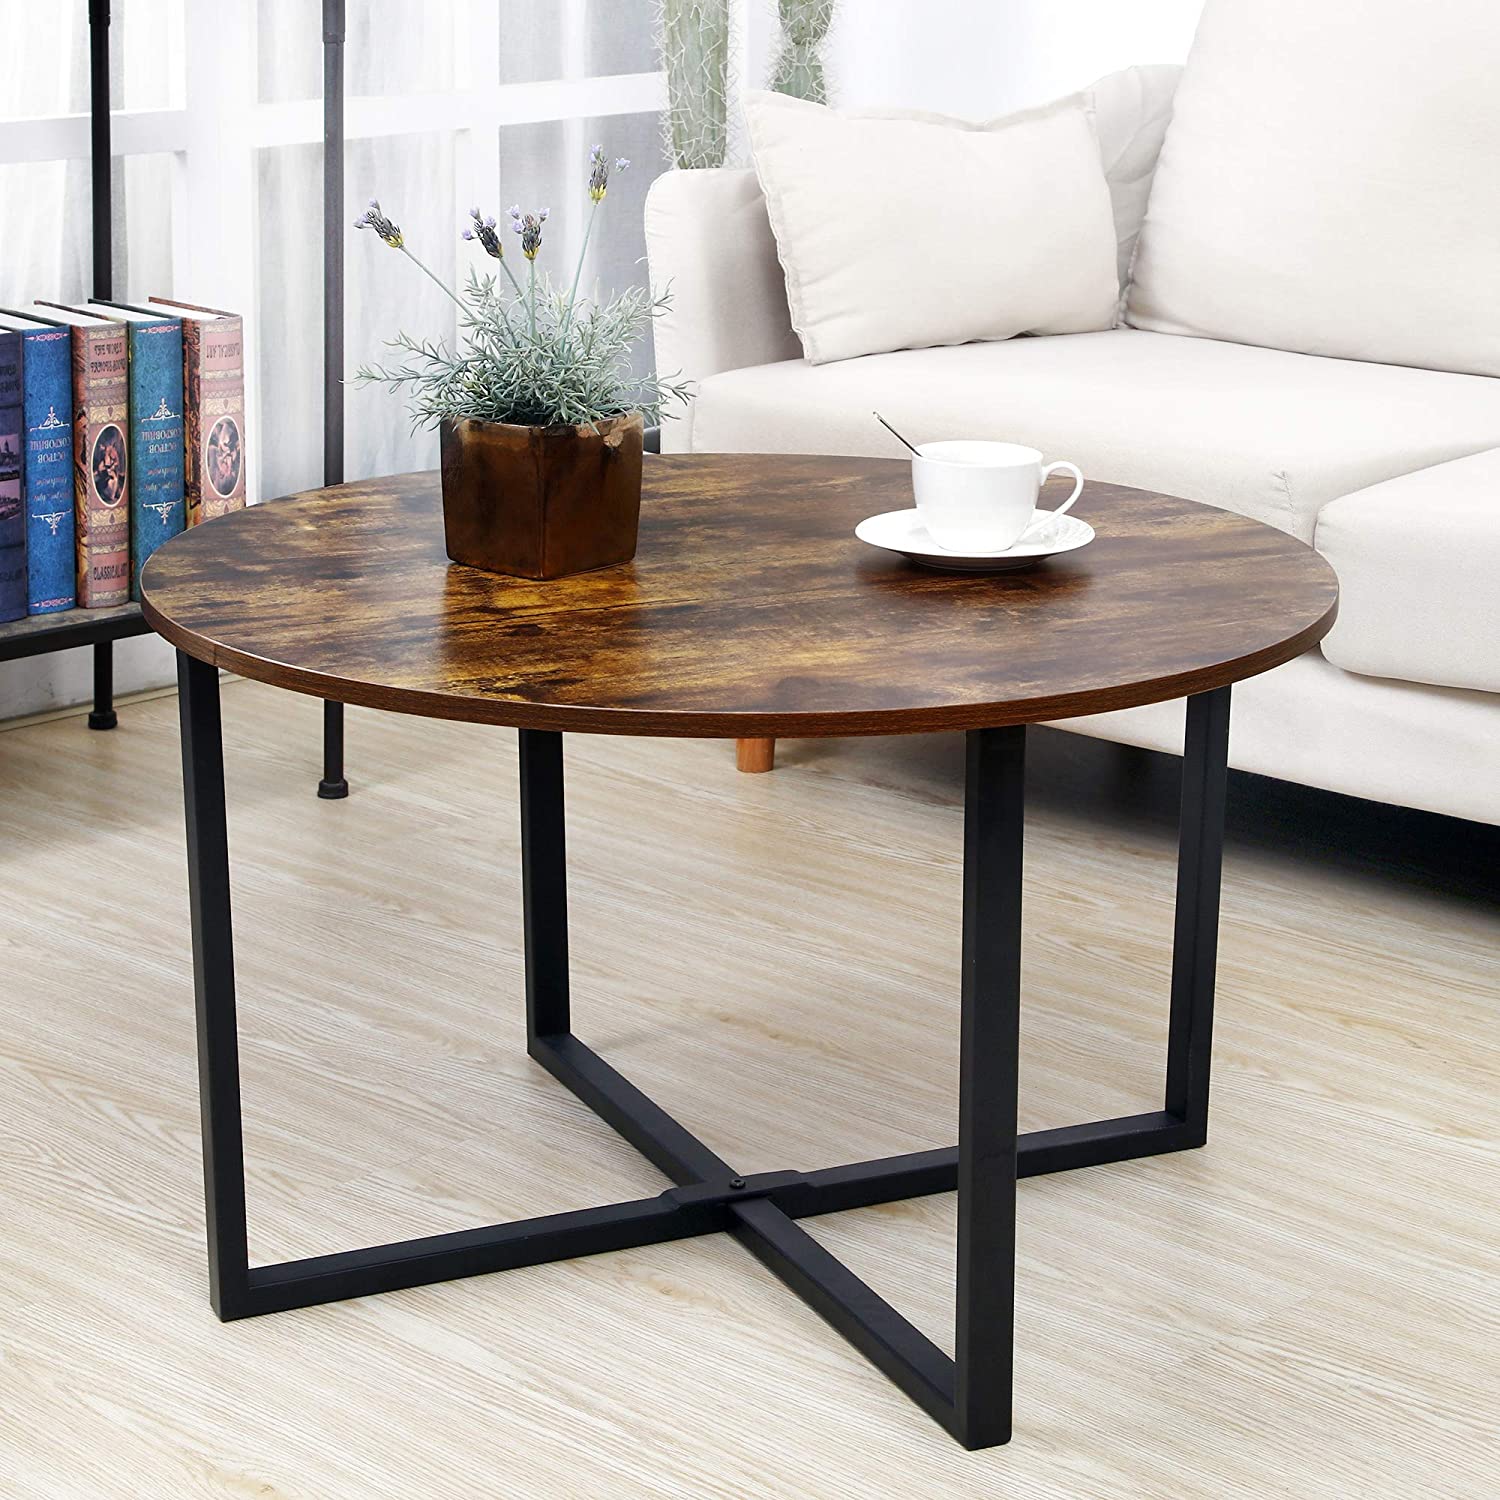 IDEALHOUSE 80cm Round Coffee Table – idealhousevip